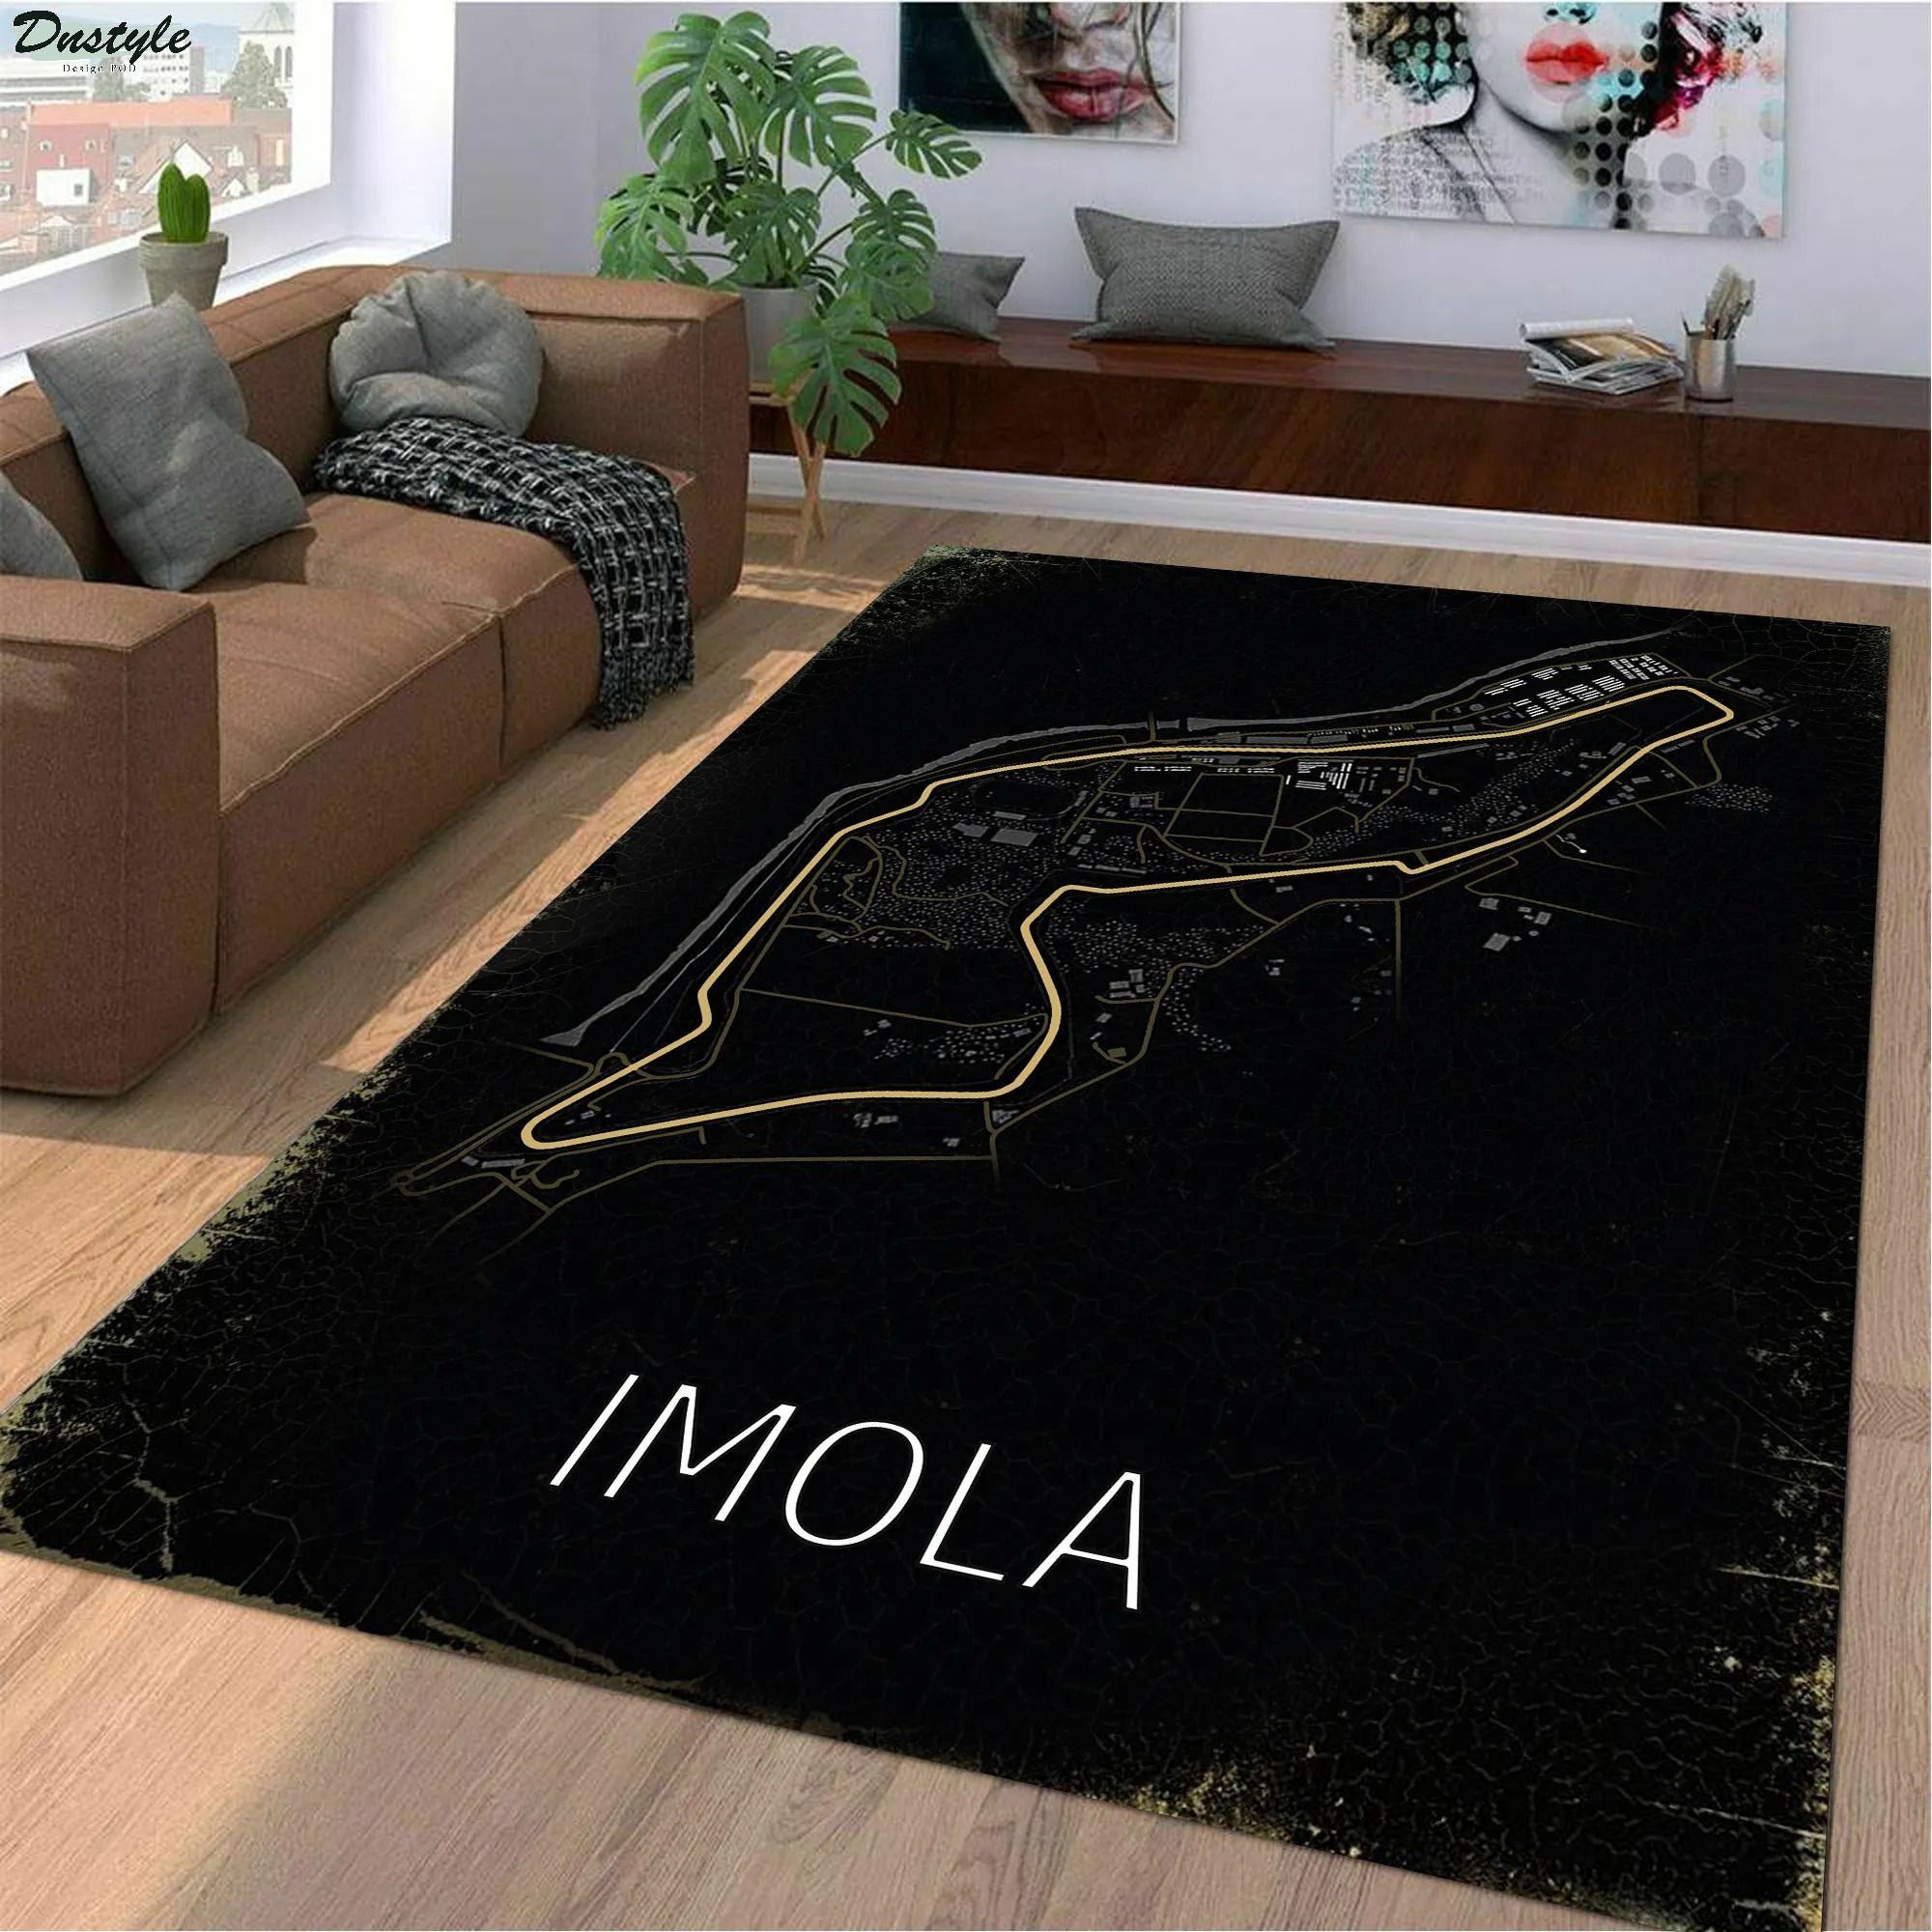 Imola f1 track rug